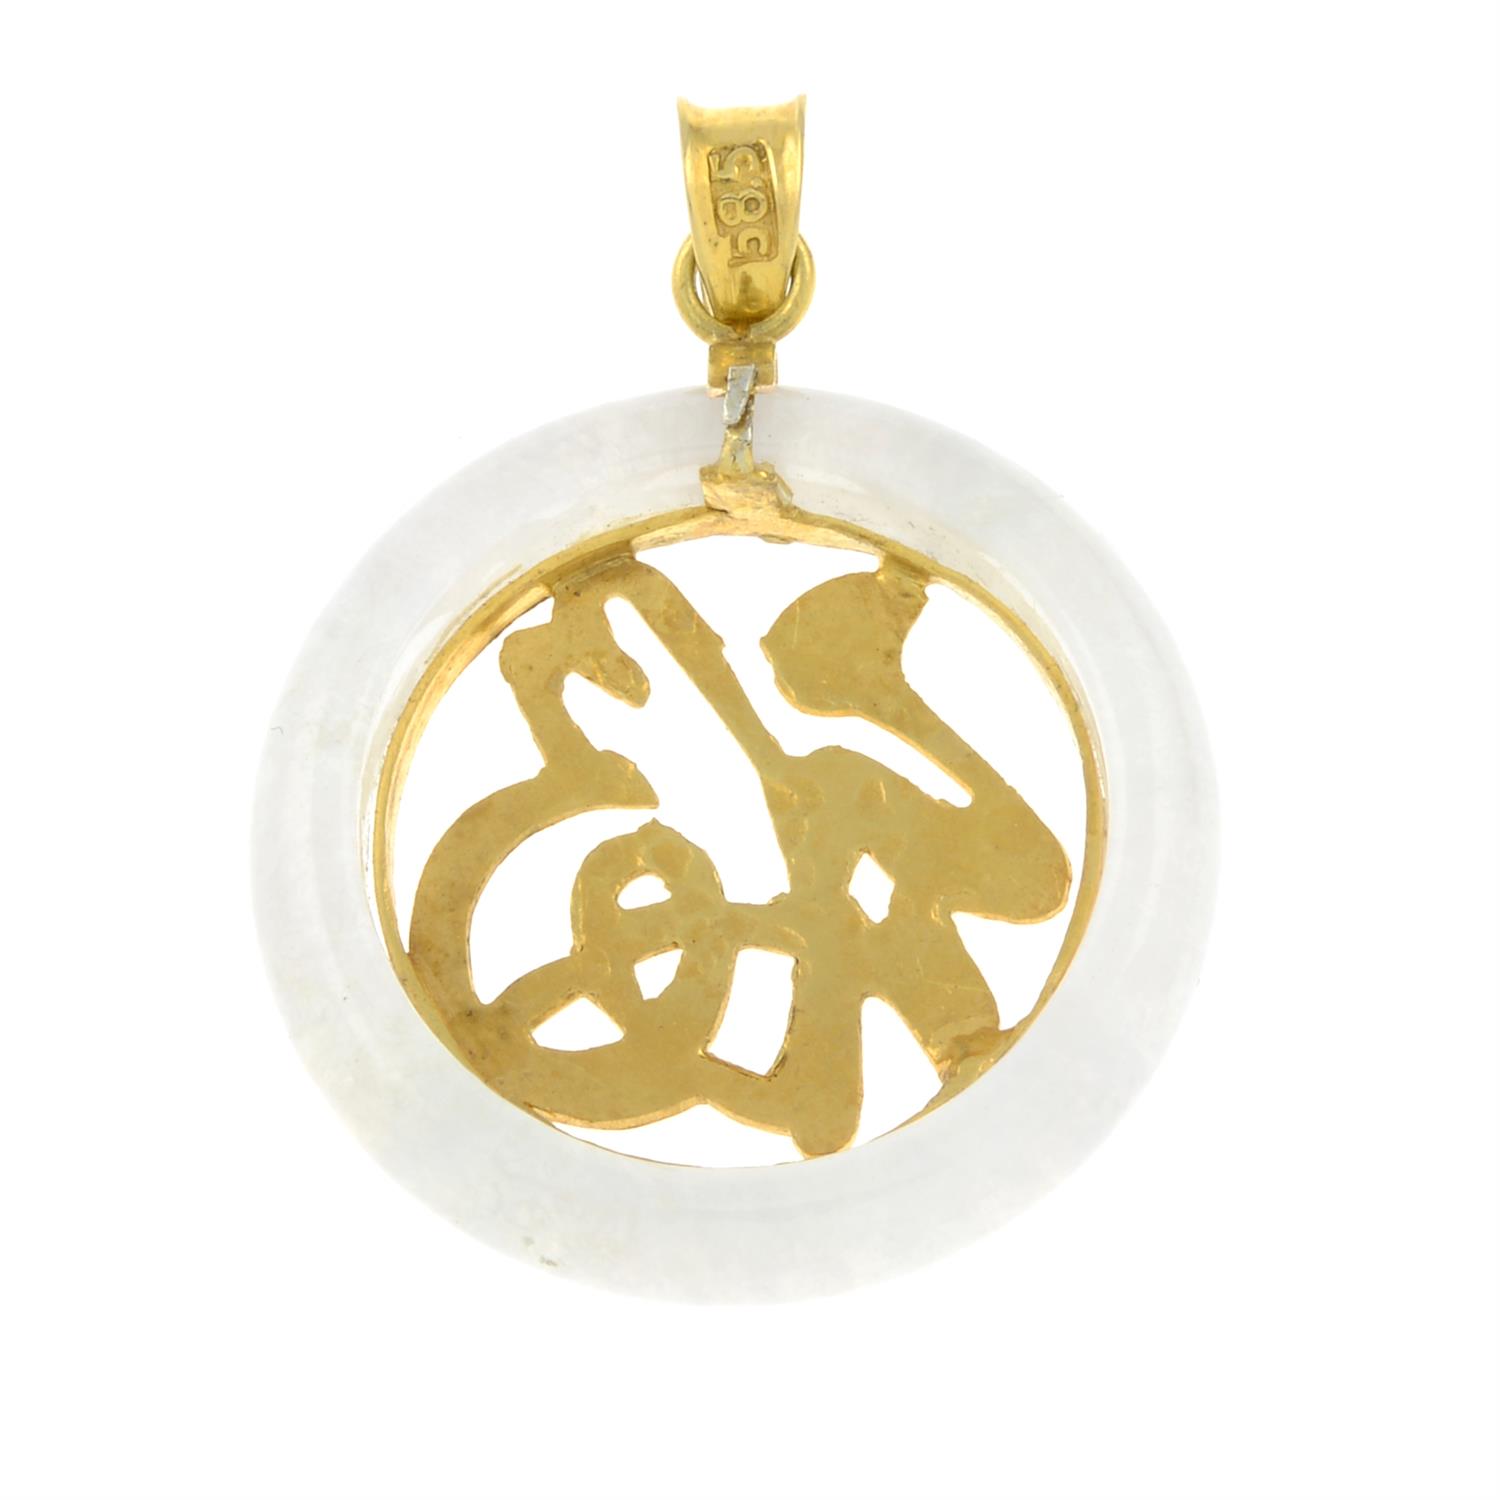 A jade pendant. - Image 2 of 2